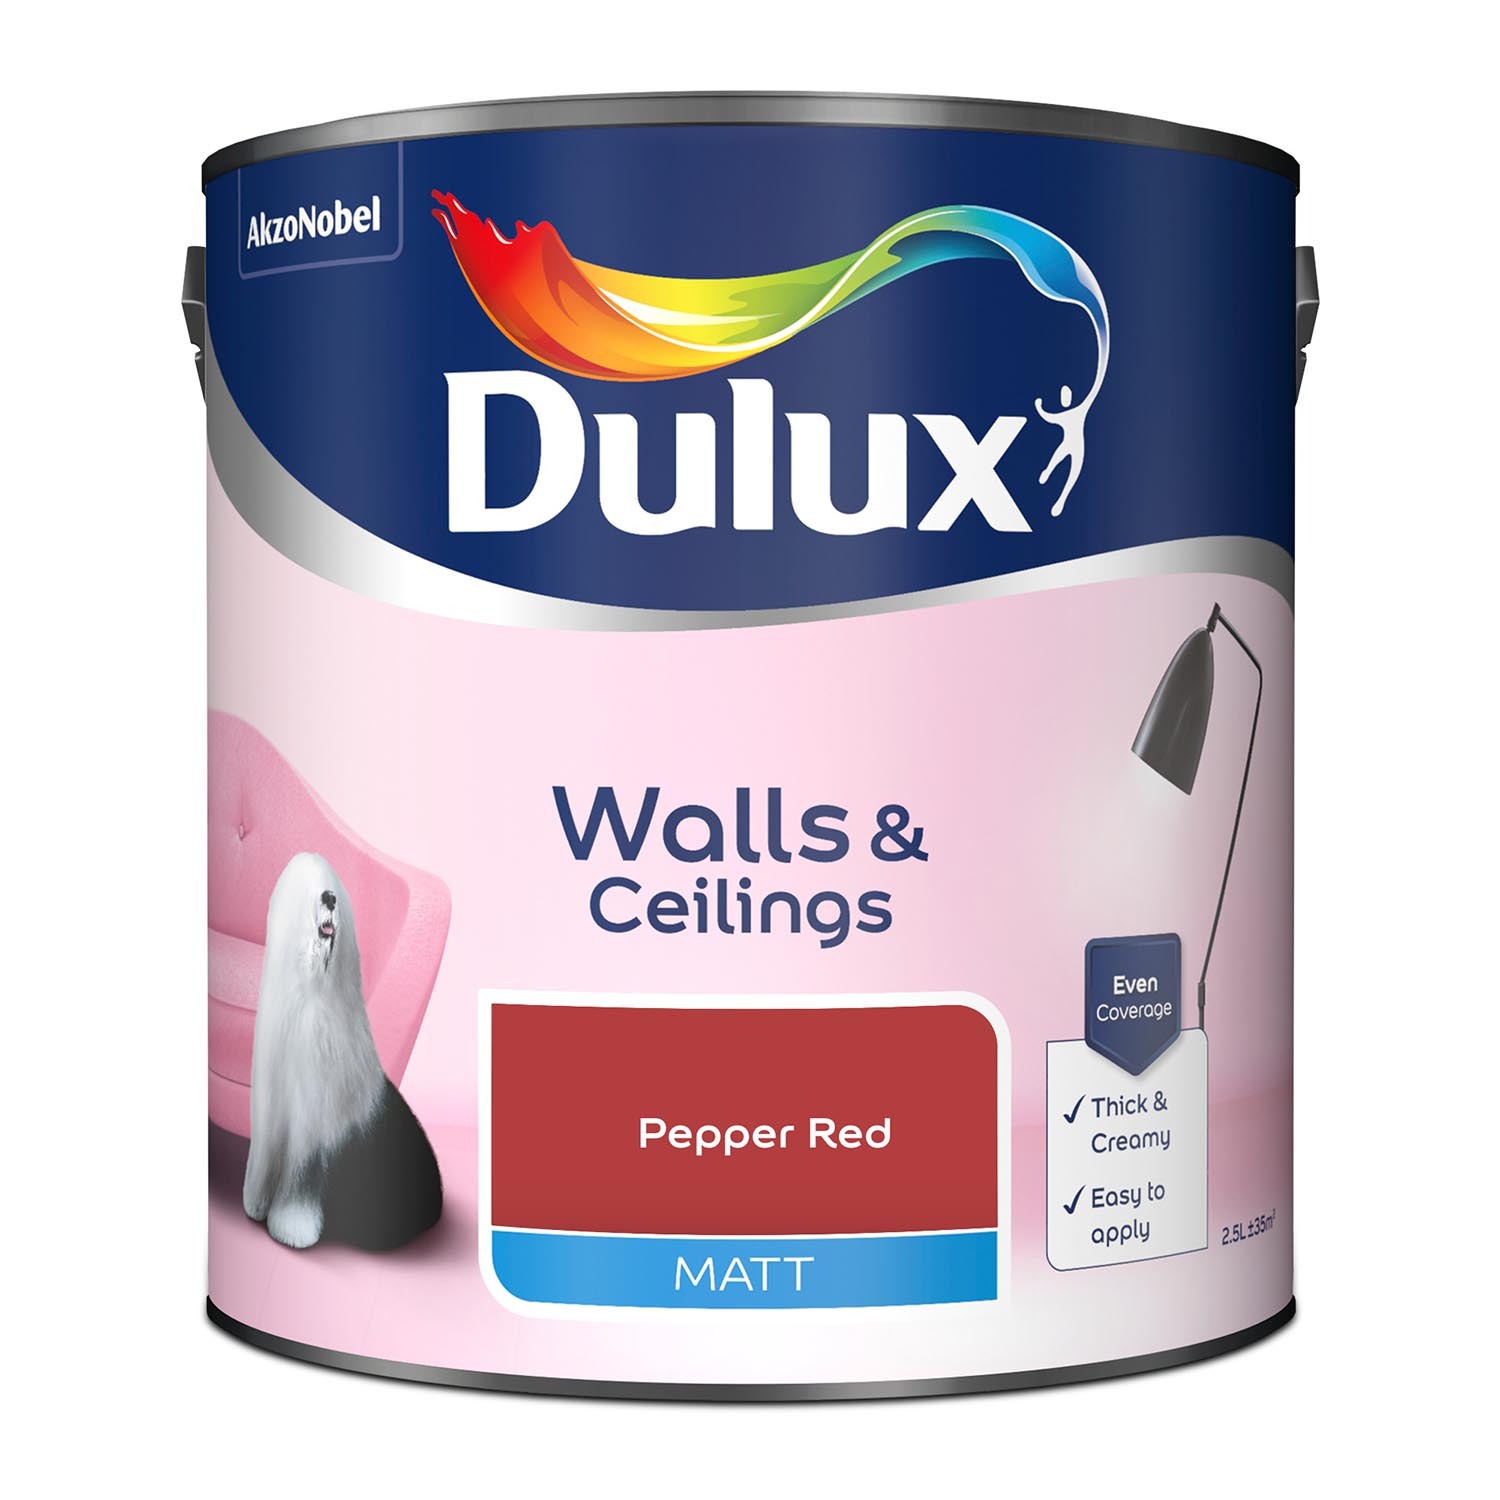 Dulux Walls & Ceilings Pepper Red Matt Emulsion Paint 2.5L Image 2